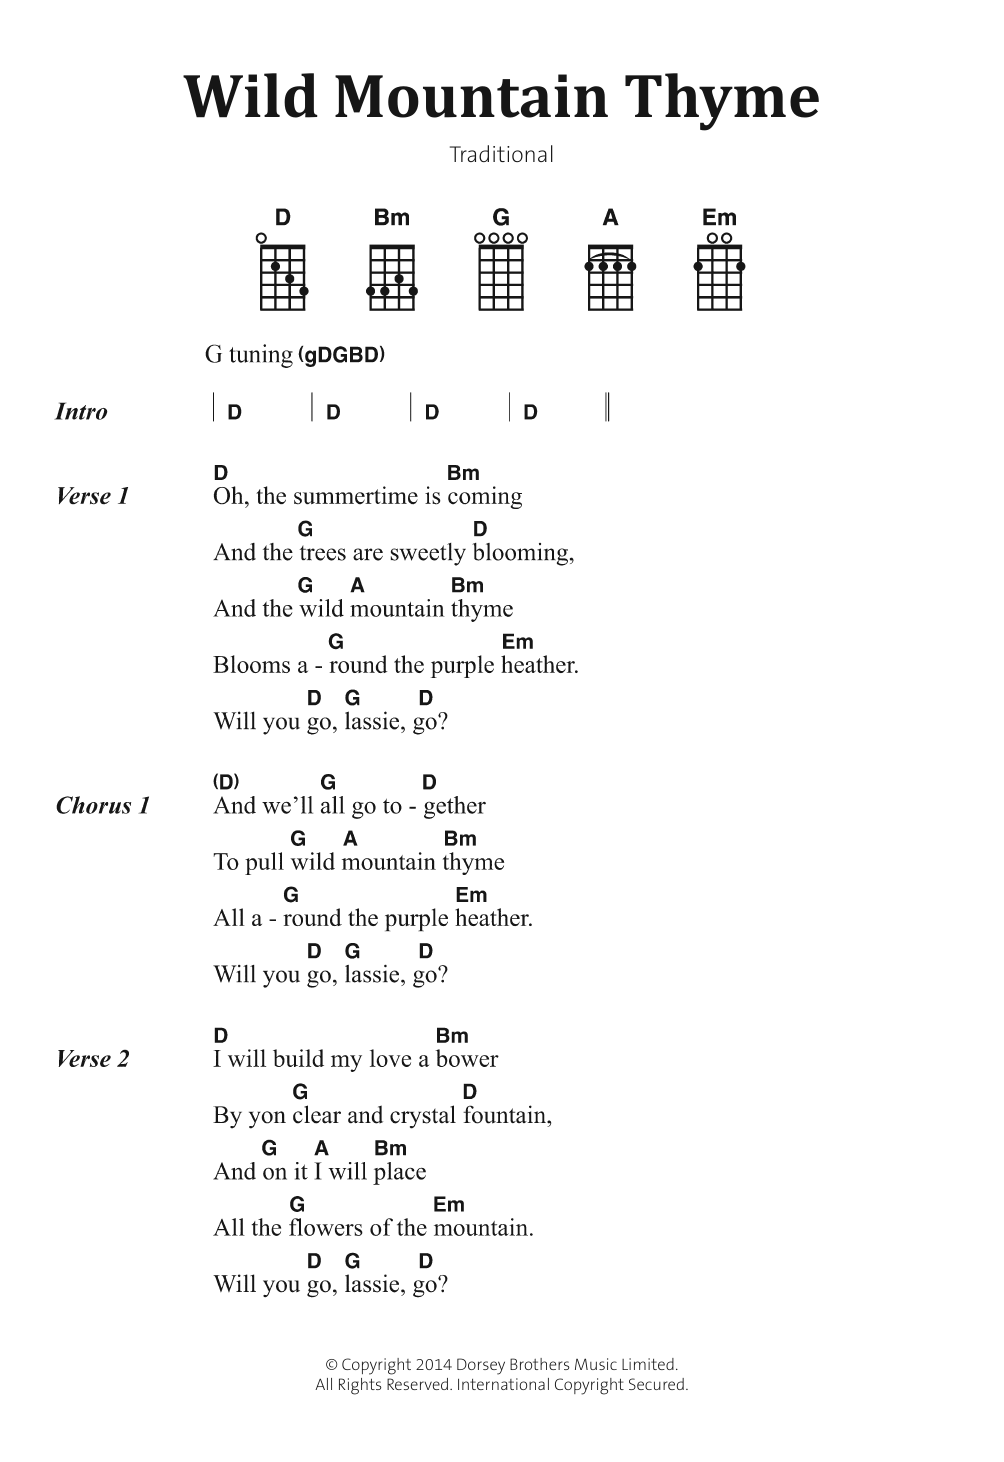 Traditional Folksong Wild Mountain Thyme Sheet Music Notes & Chords for Banjo Lyrics & Chords - Download or Print PDF